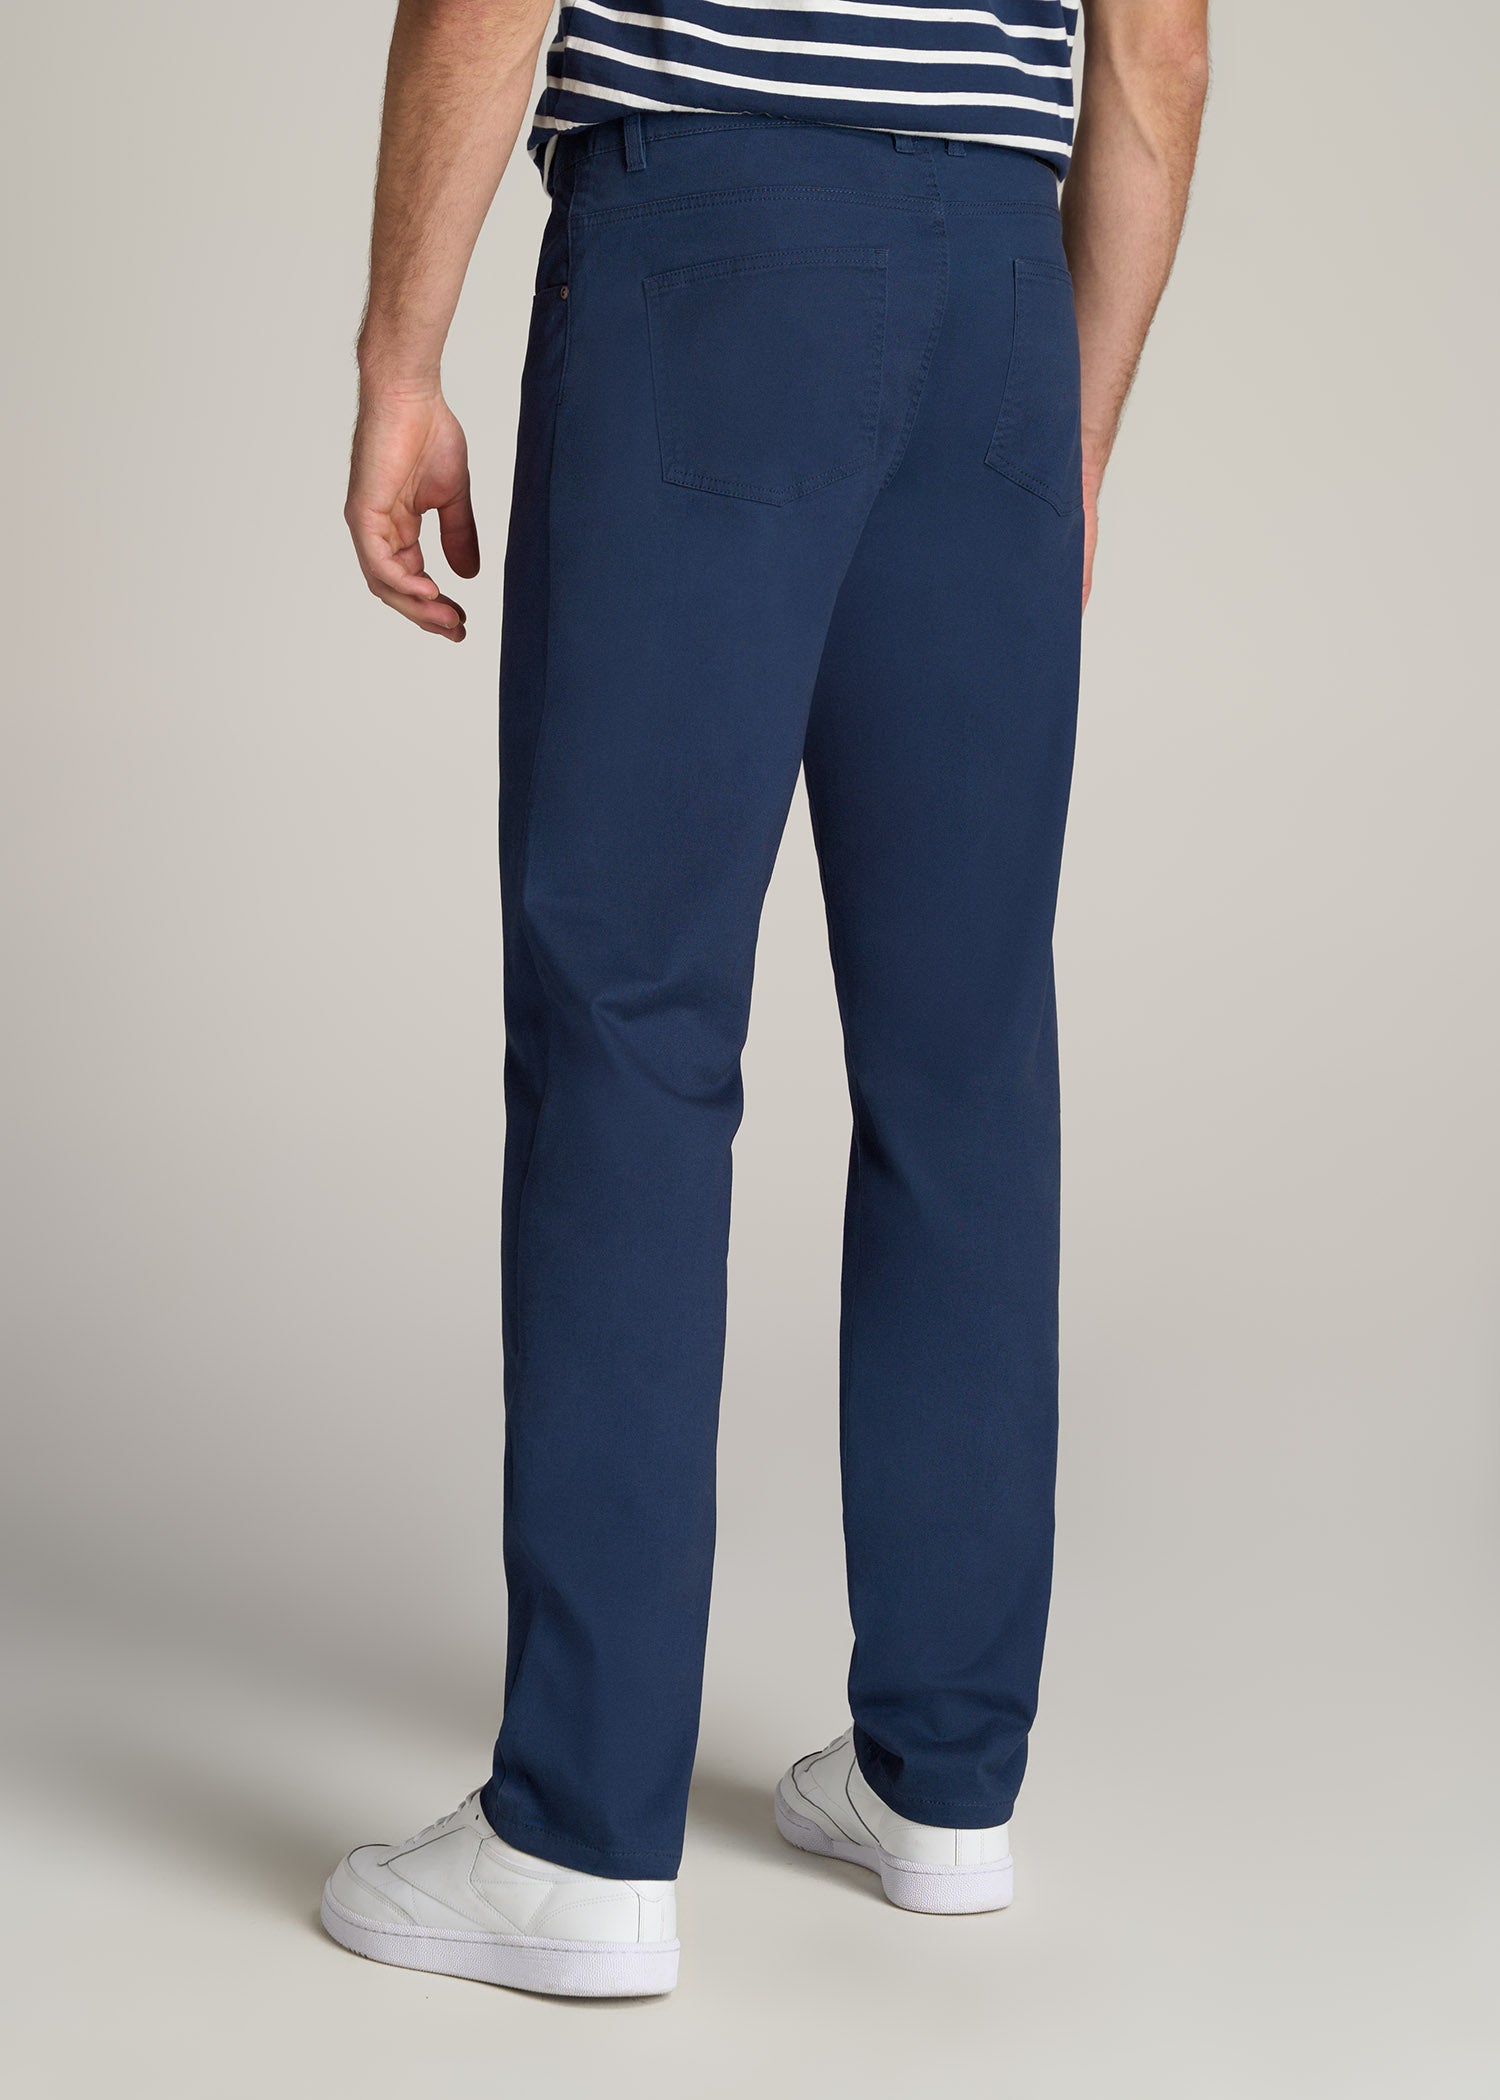 J1 Straight Leg Five Pocket Khaki Pants For Tall Men, American Tall